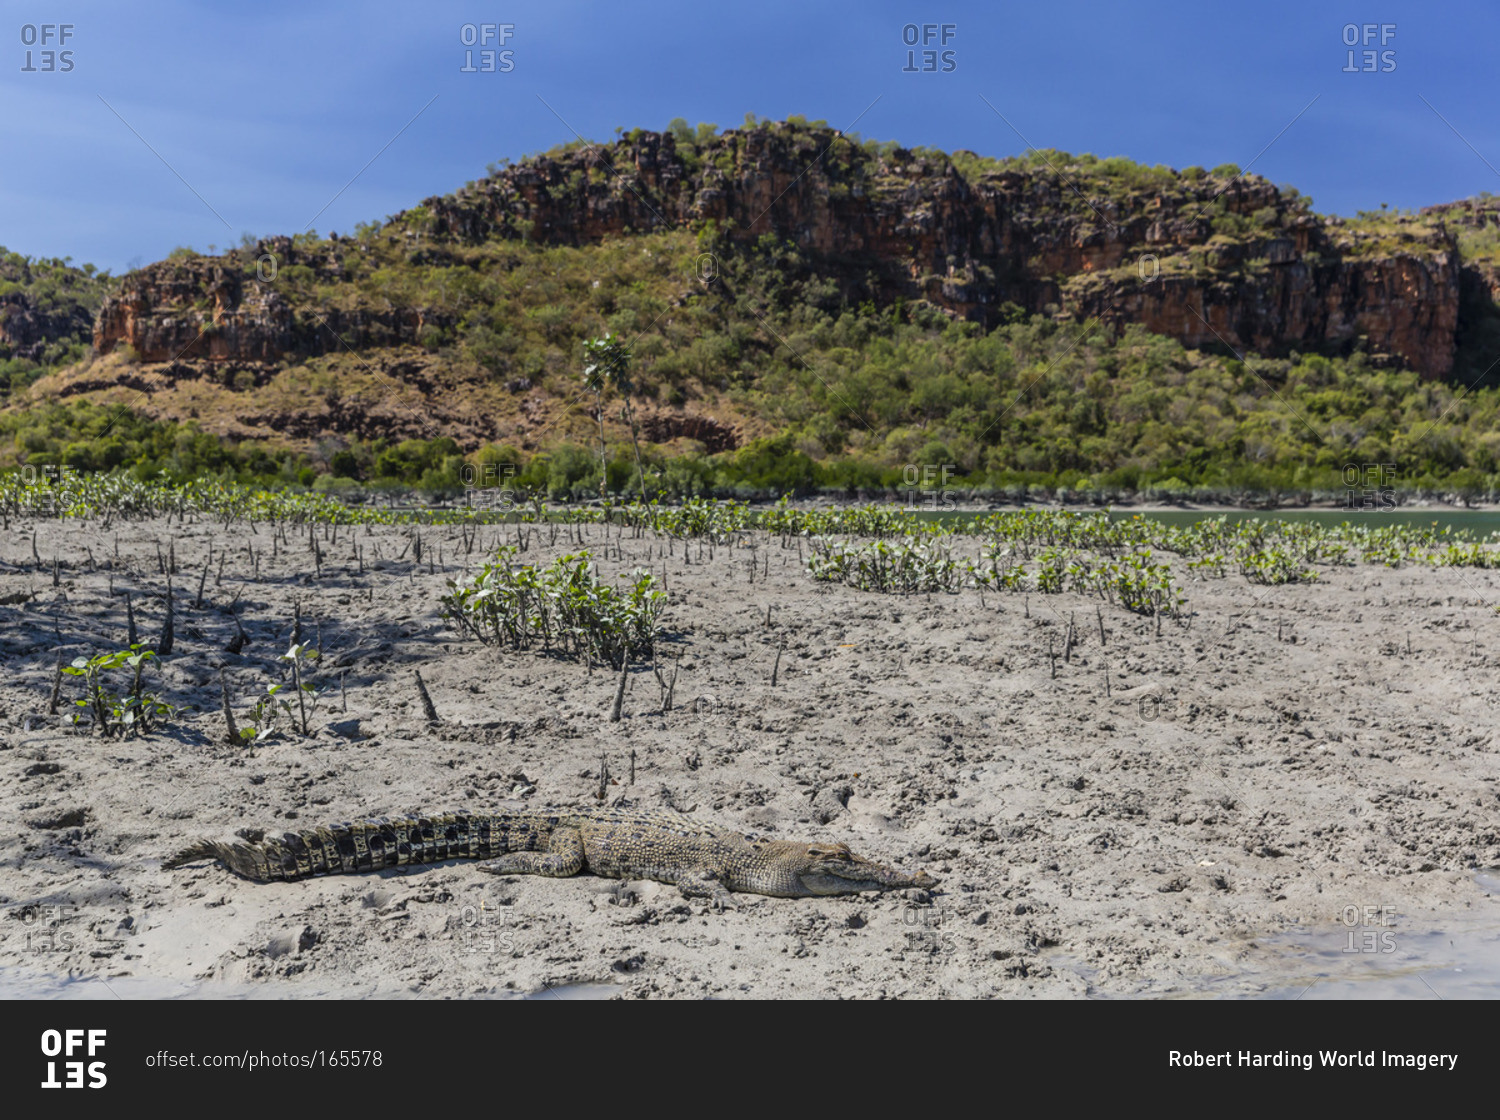 An adult wild saltwater crocodile (Crocodylus porosus) on the banks of the Hunter River in Mitchell River National Park, Kimberley, Western Australia, Australia